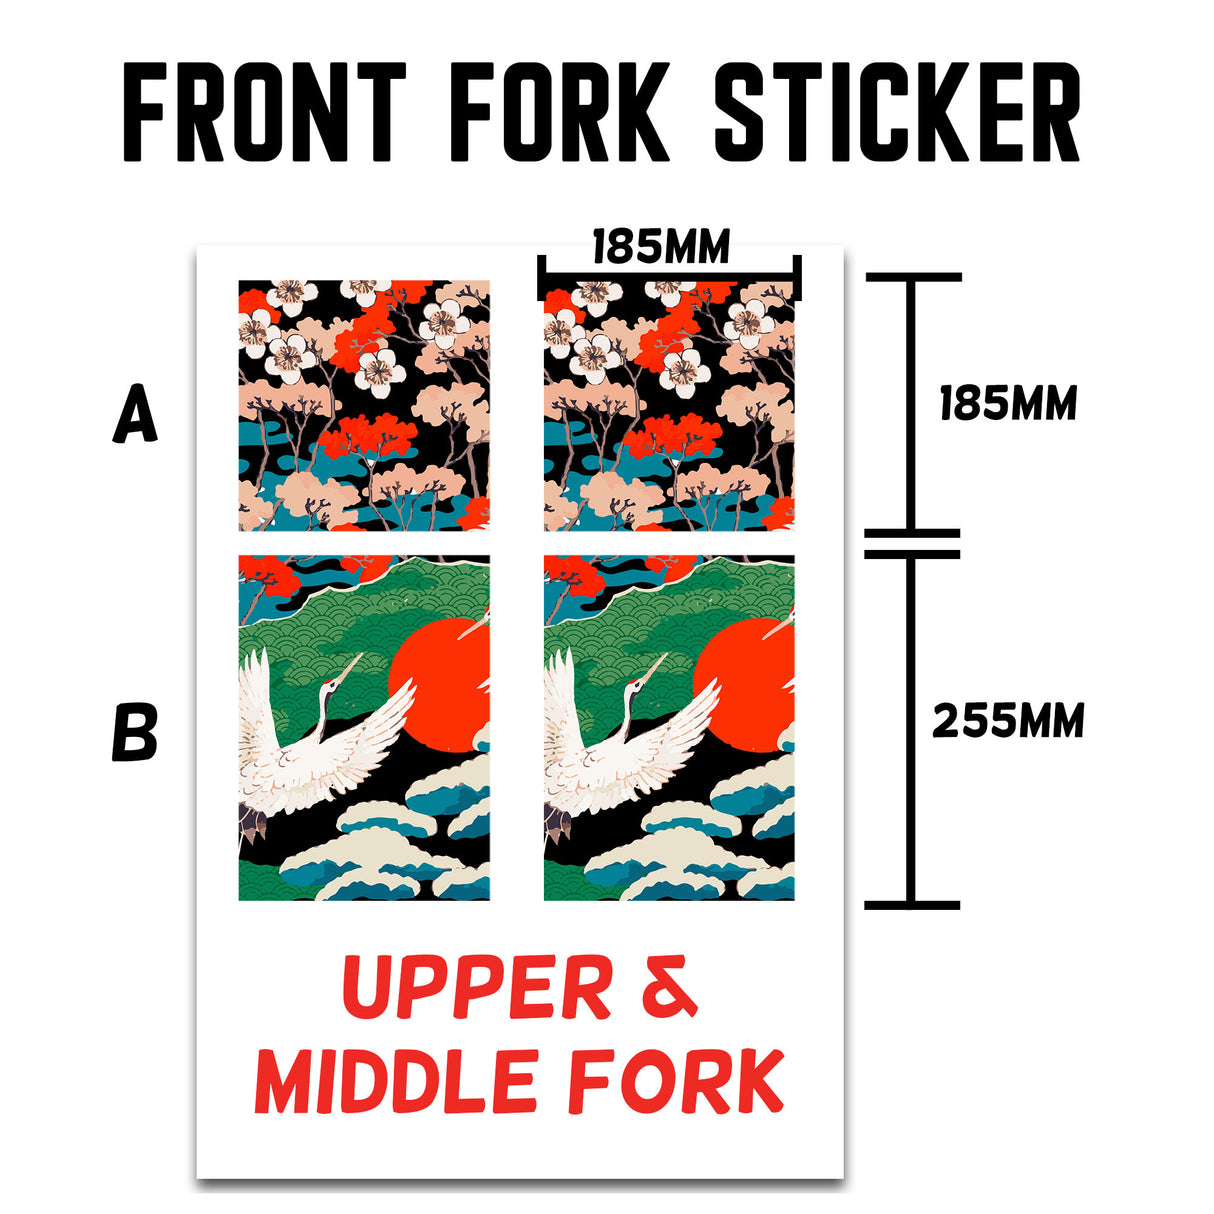 MX Drit Bike Front Fork Wrap Sticker Protection For Honda Yamaha Kawaski Suzuki [TT35 JapaneseťCrane] - StickerBao Wheel Sticker Store